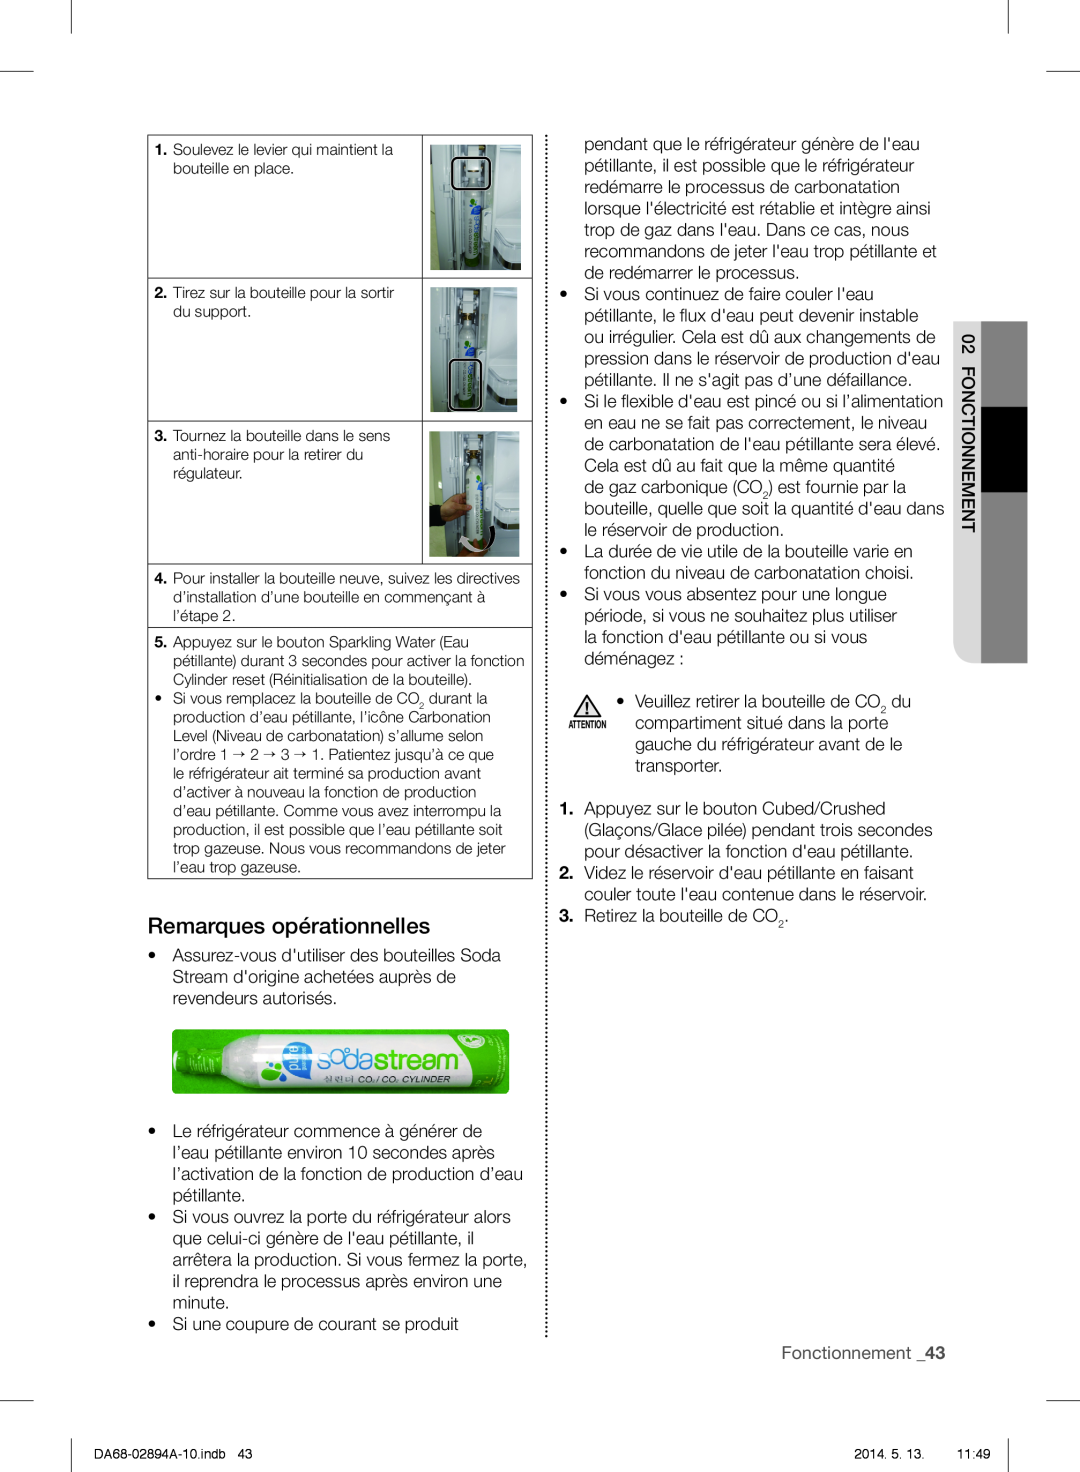 Samsung RF31FMESBSR user manual Remarques opérationnelles, Fonctionnement _43 